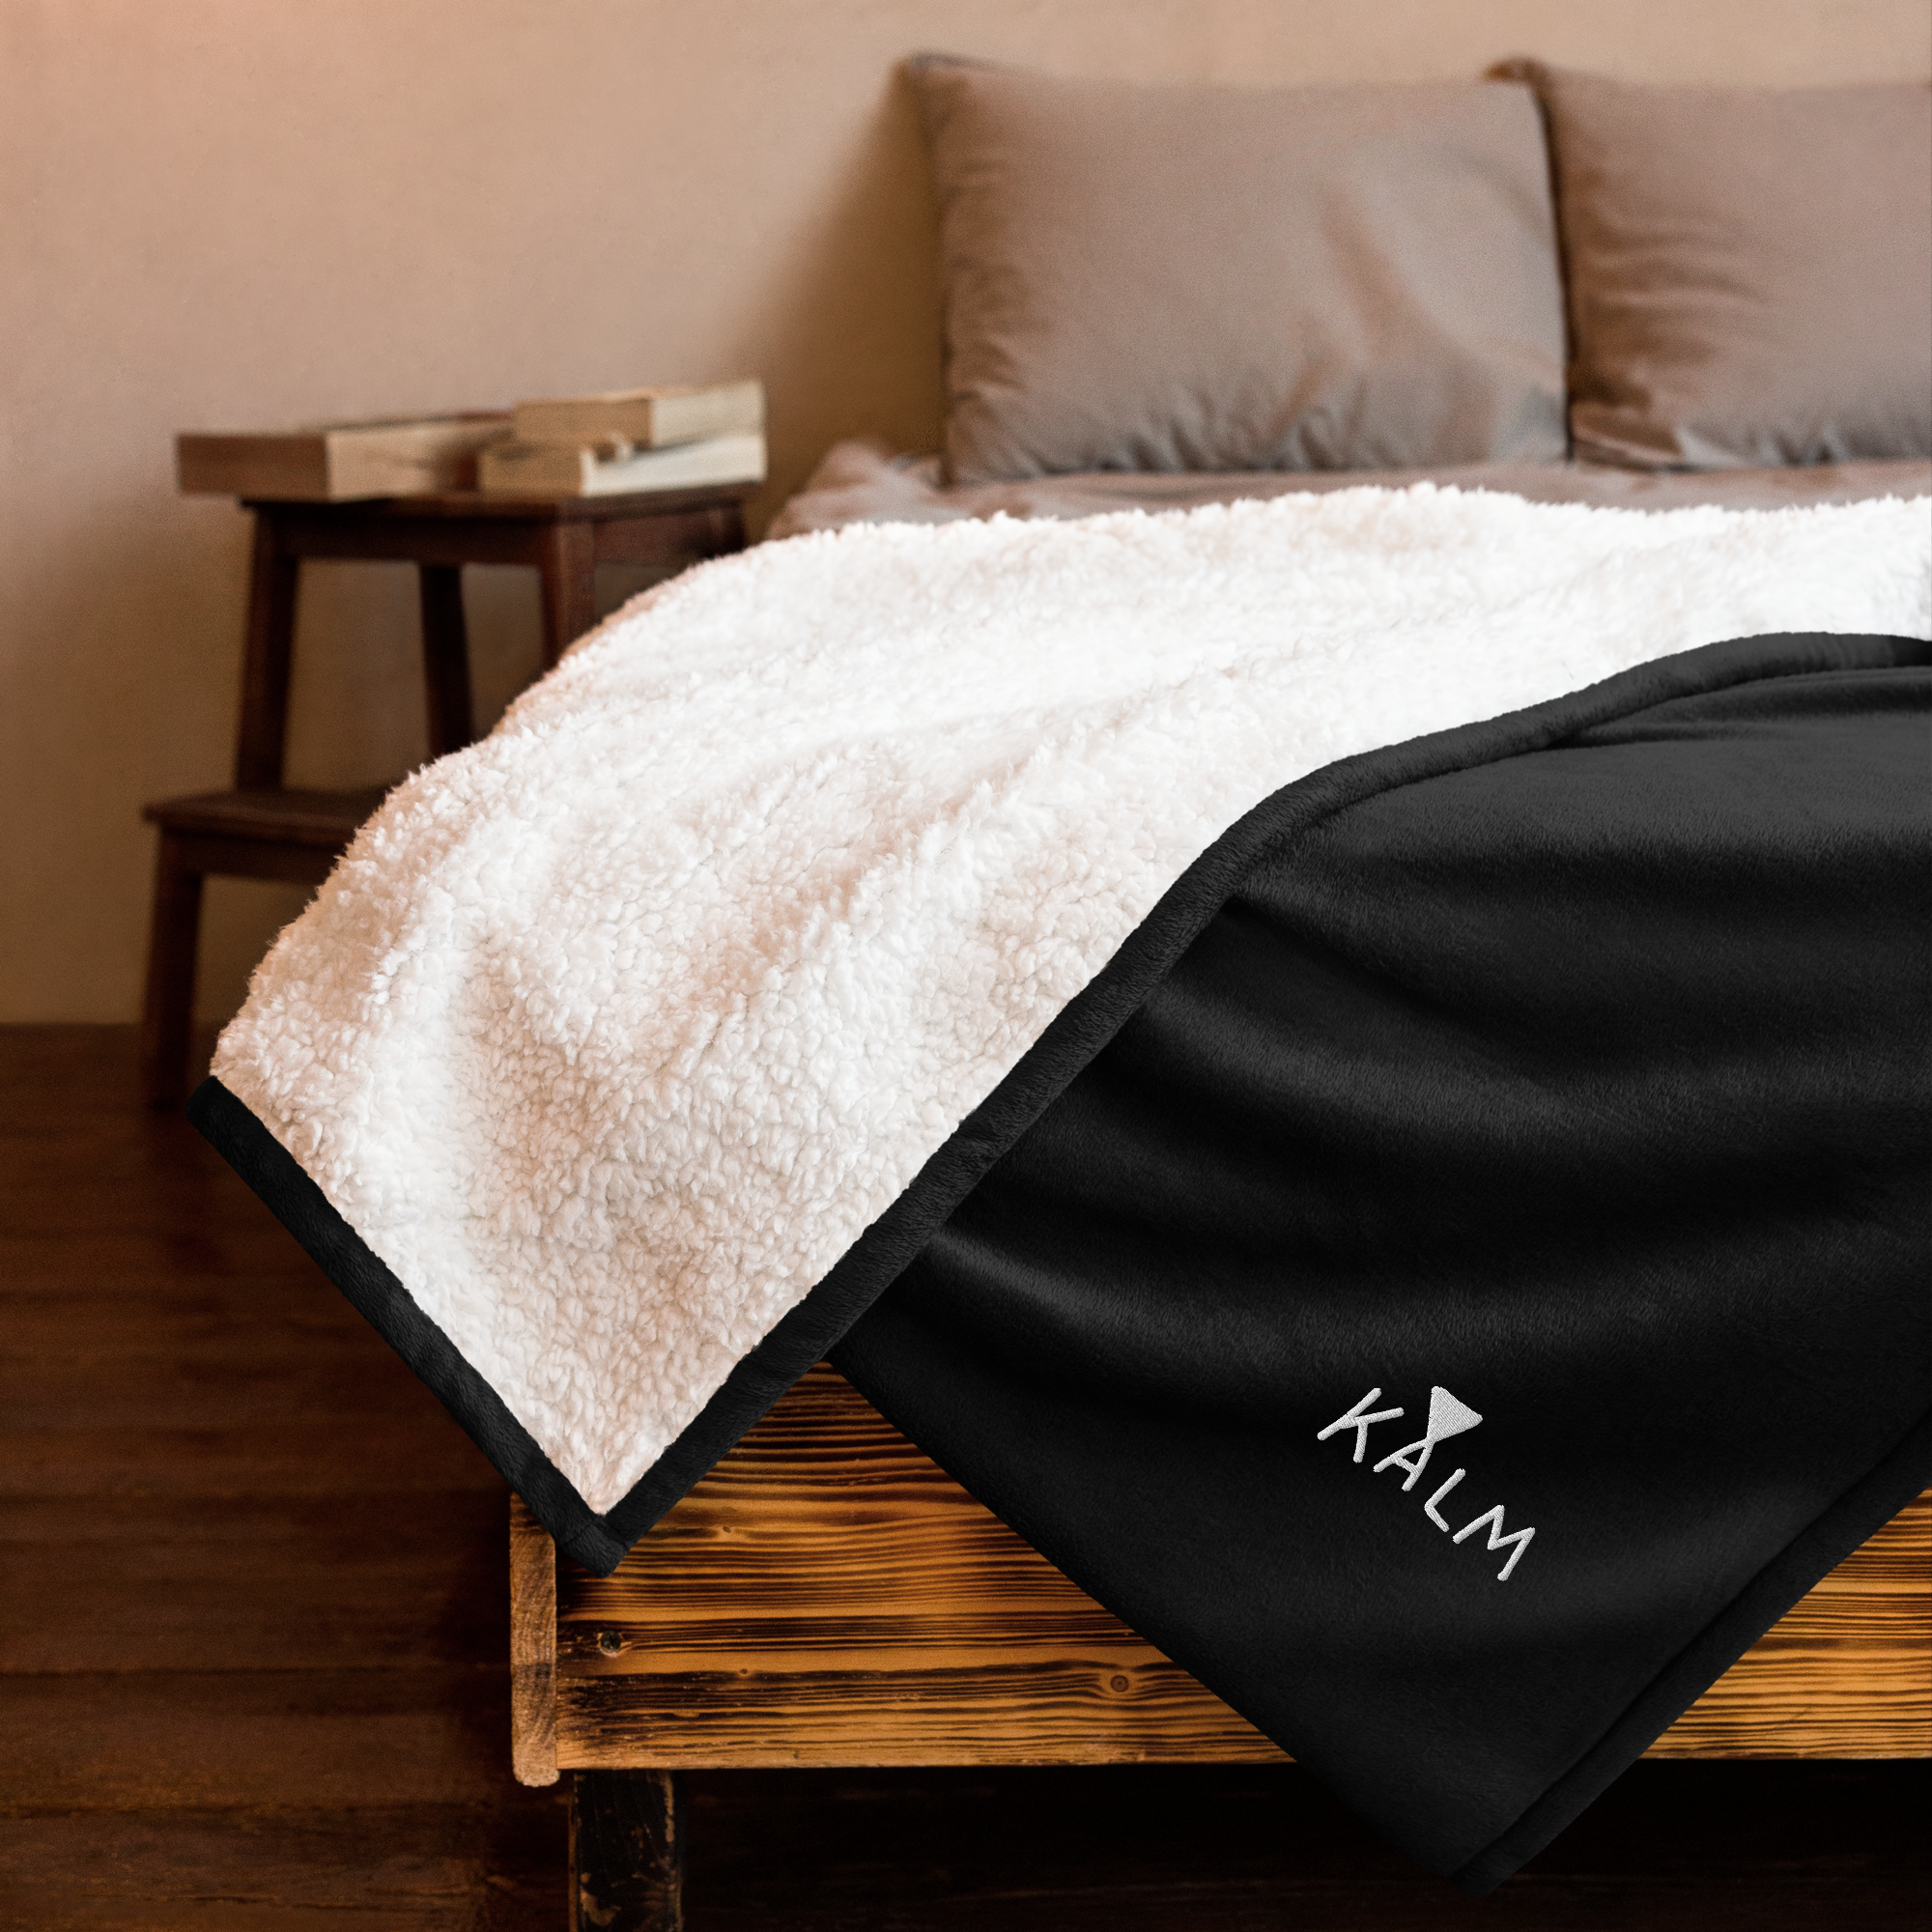 Kalm Premium Sherpa Blanket